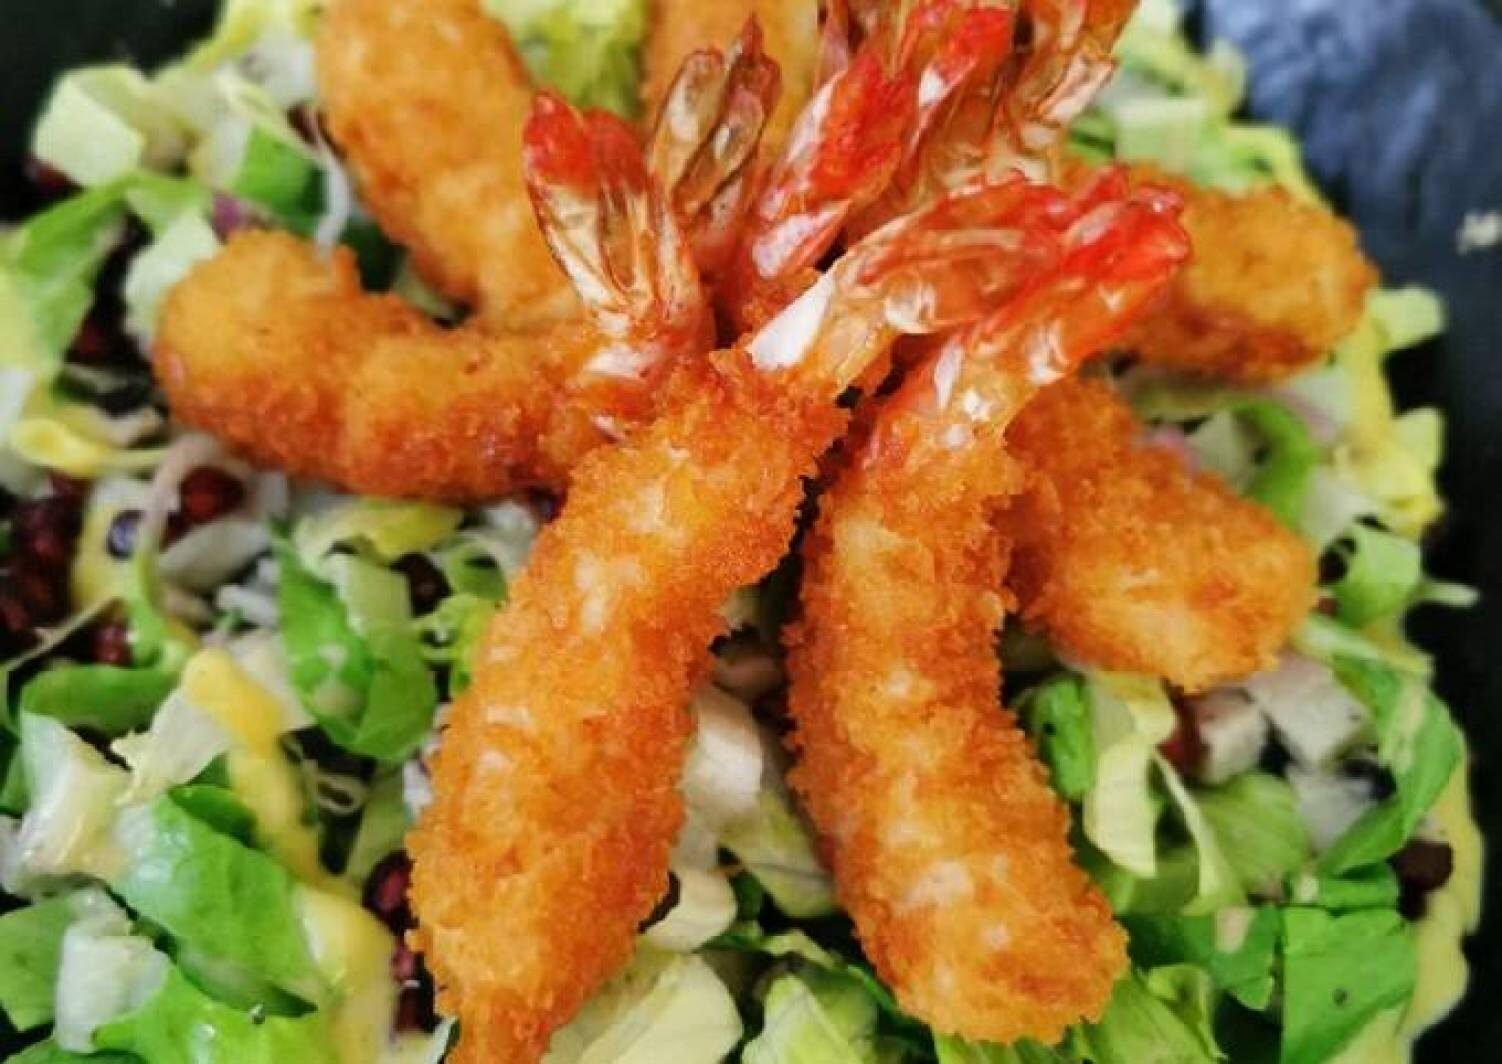 Shrimp tempura with green salad